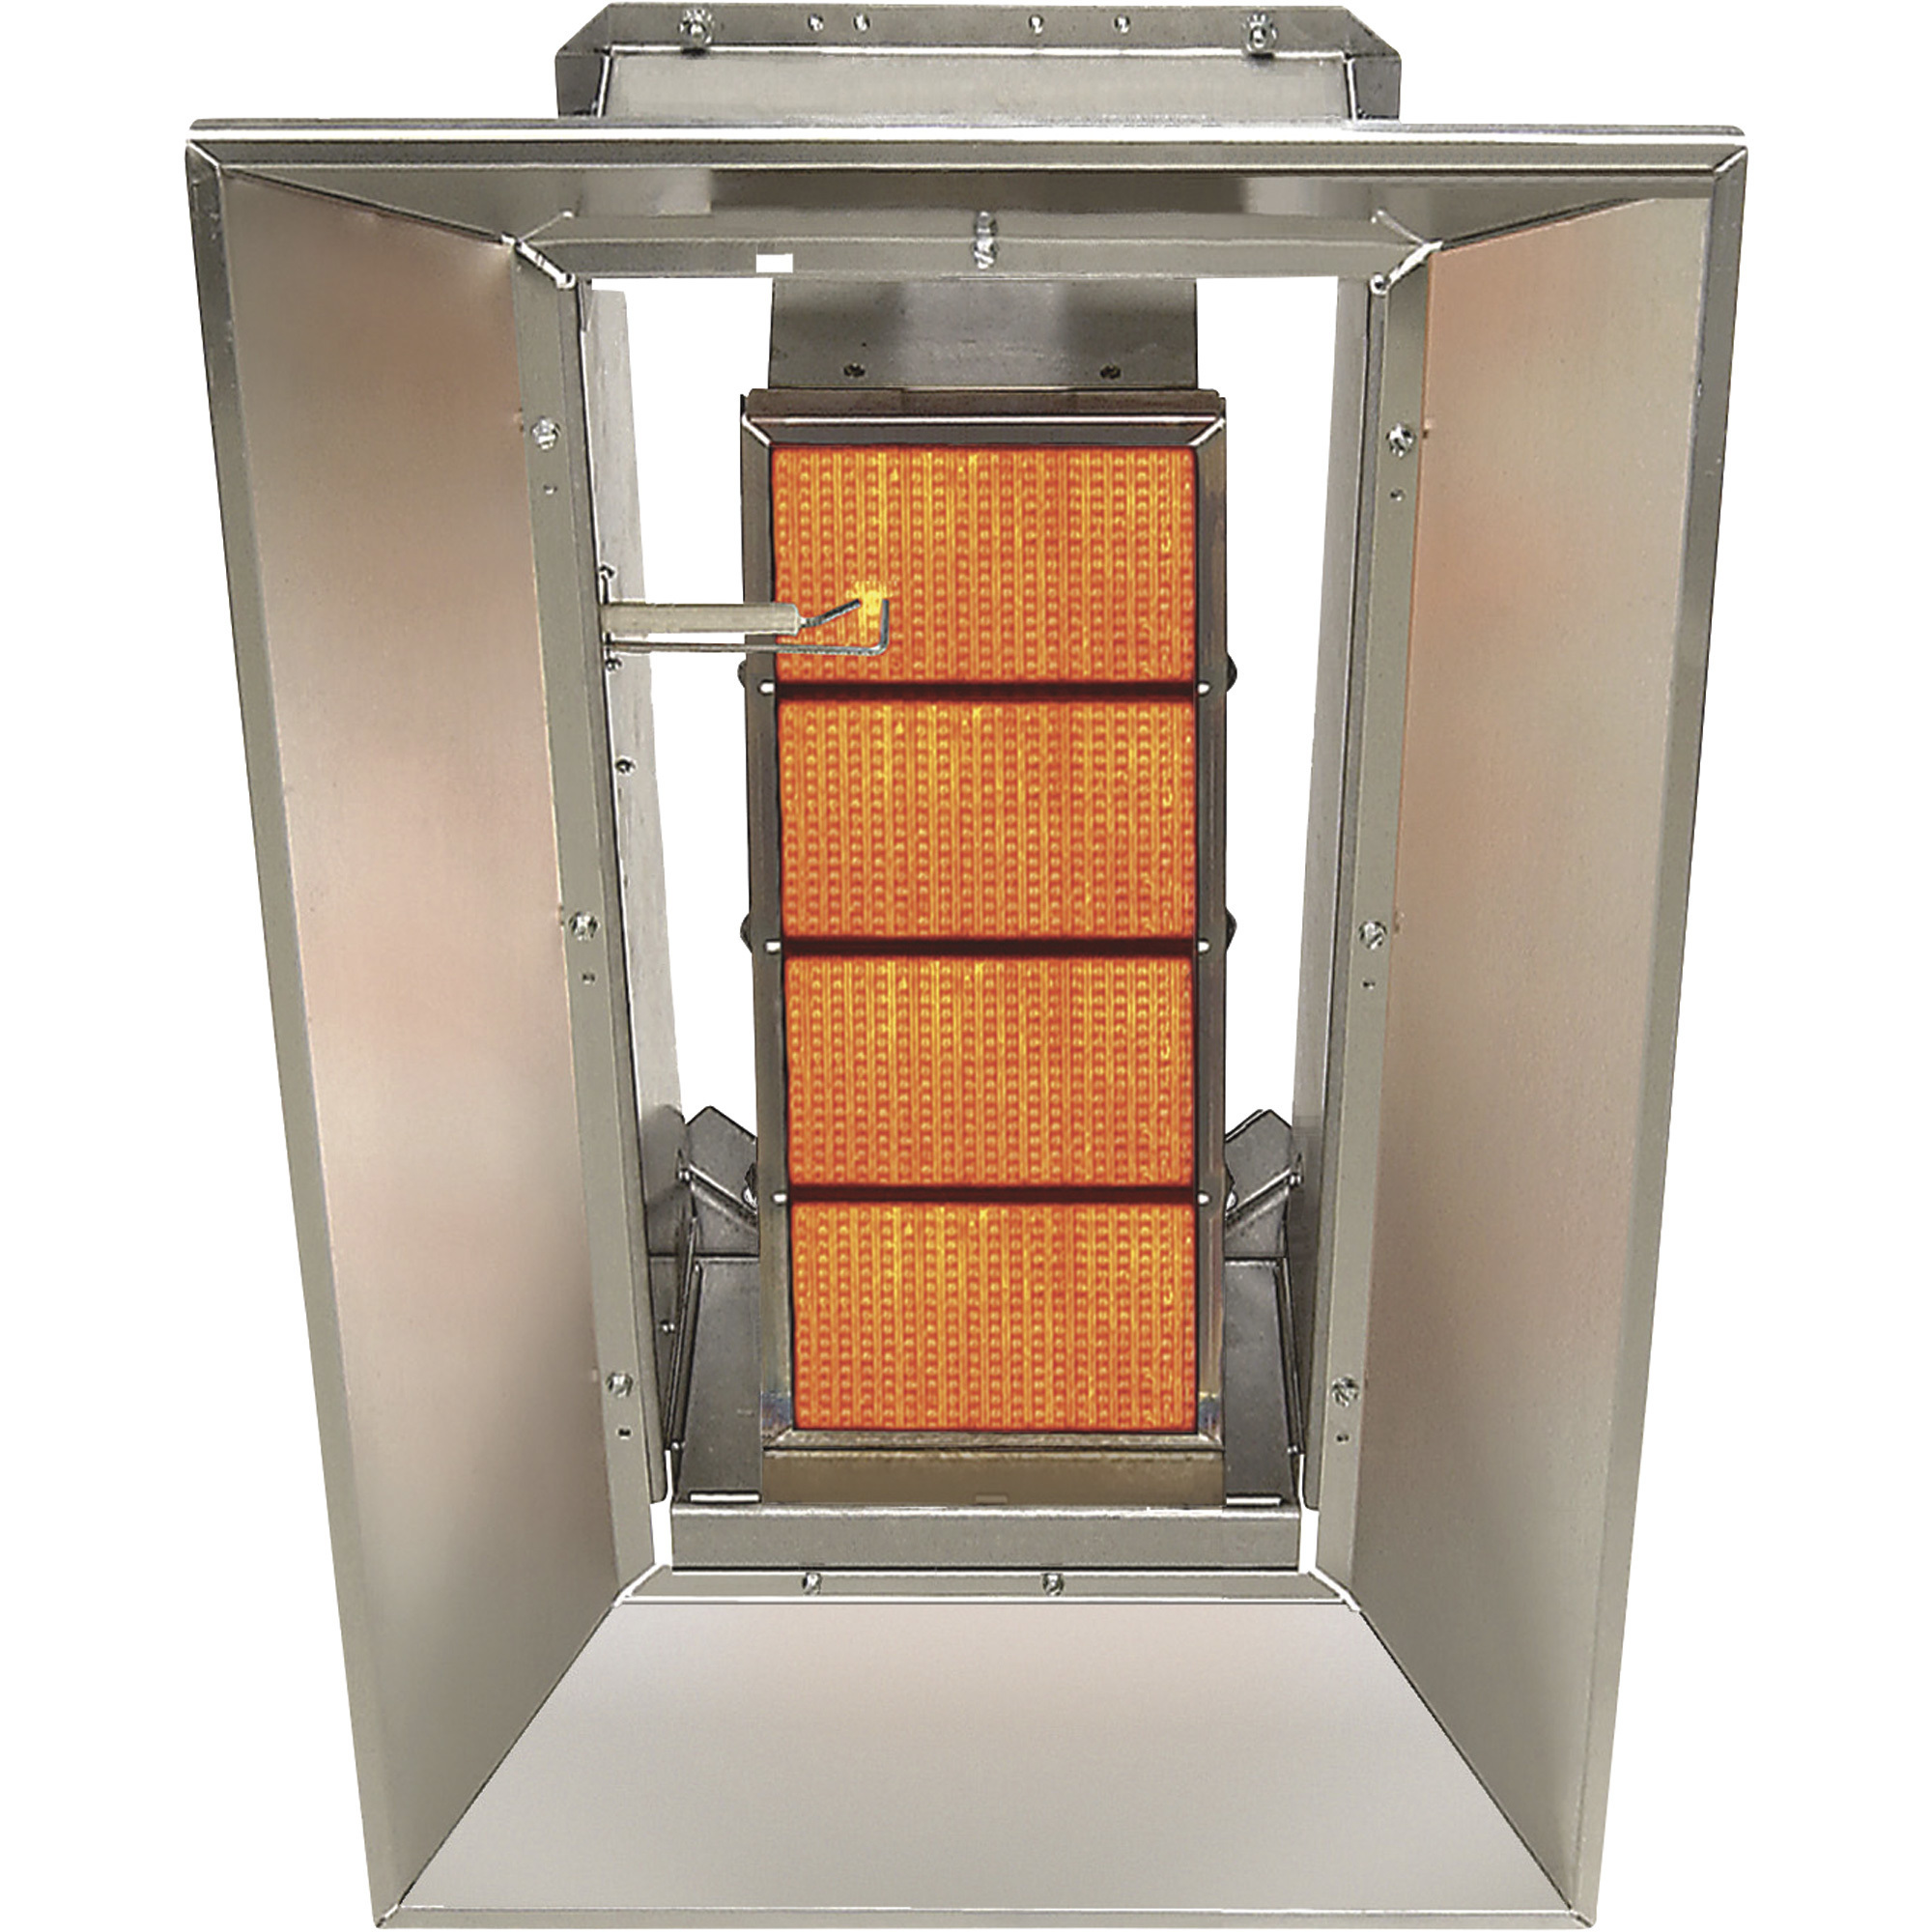 SunStar Heating Products Infrared Ceramic Heater, Natural Gas, 60,000 BTU, Model SG6-N